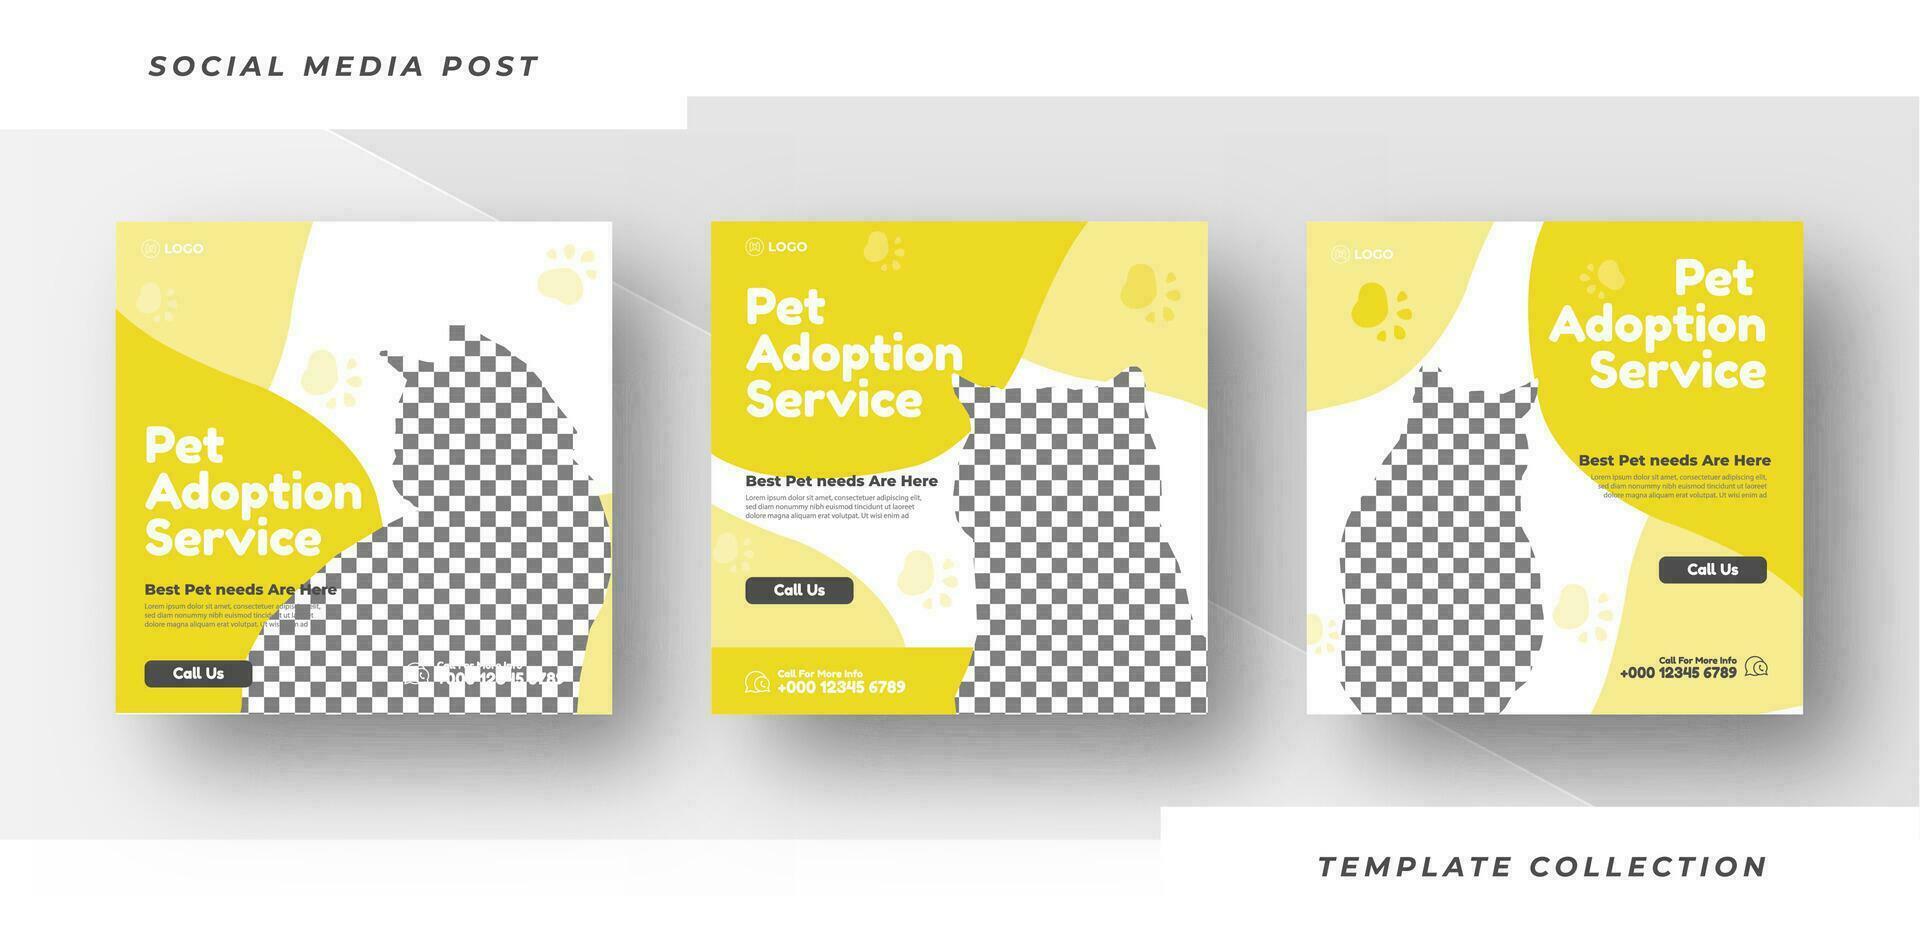 Adoption service Pet food shop banner for social media post template. Pro Vector